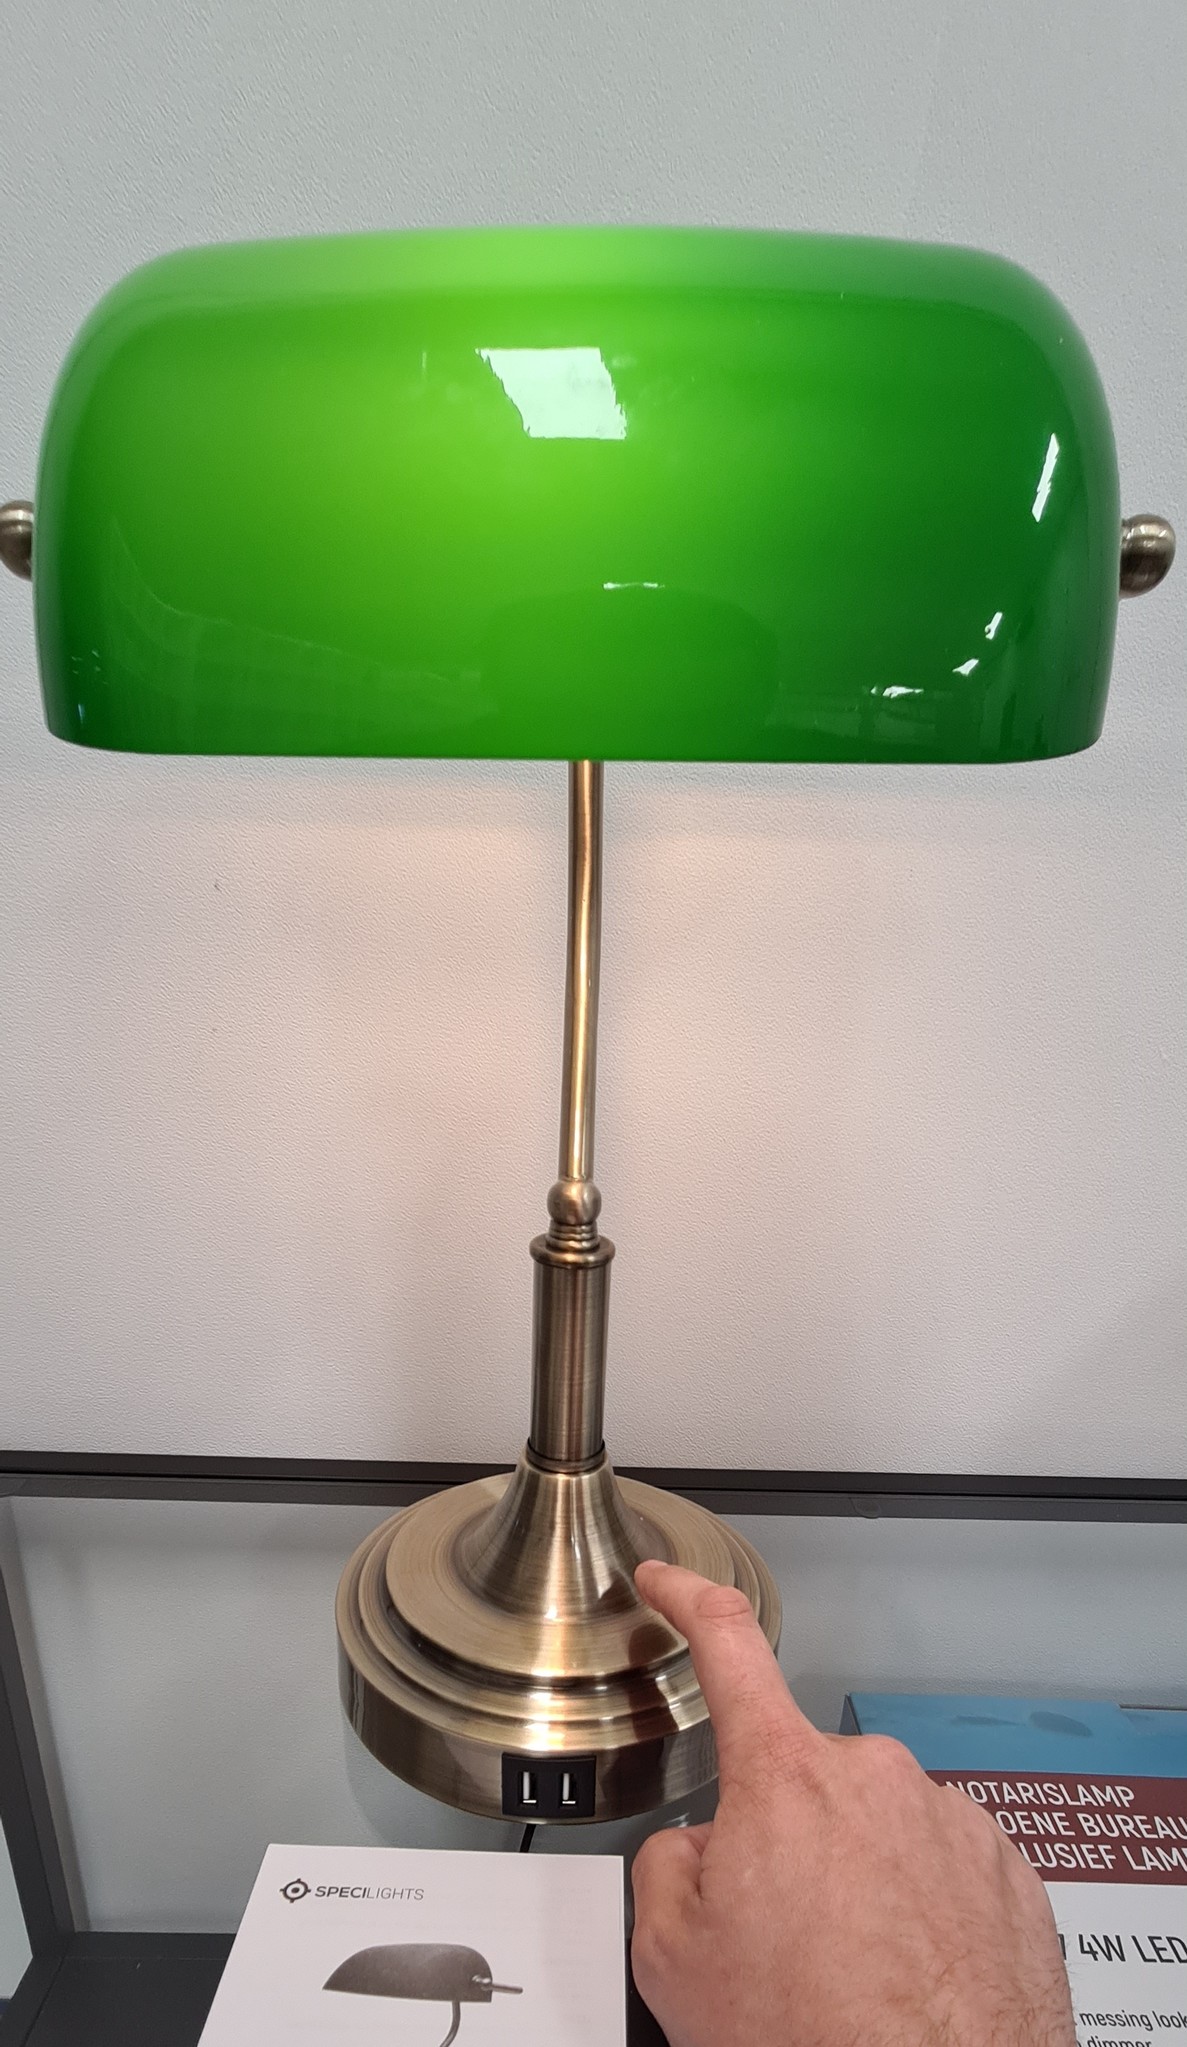 Notarislamp - Groene Bureaulamp inclusief Lamp - Touchdimmer - USB aansluiting - Bankierslamp met E27 fitting LedlampshopXL